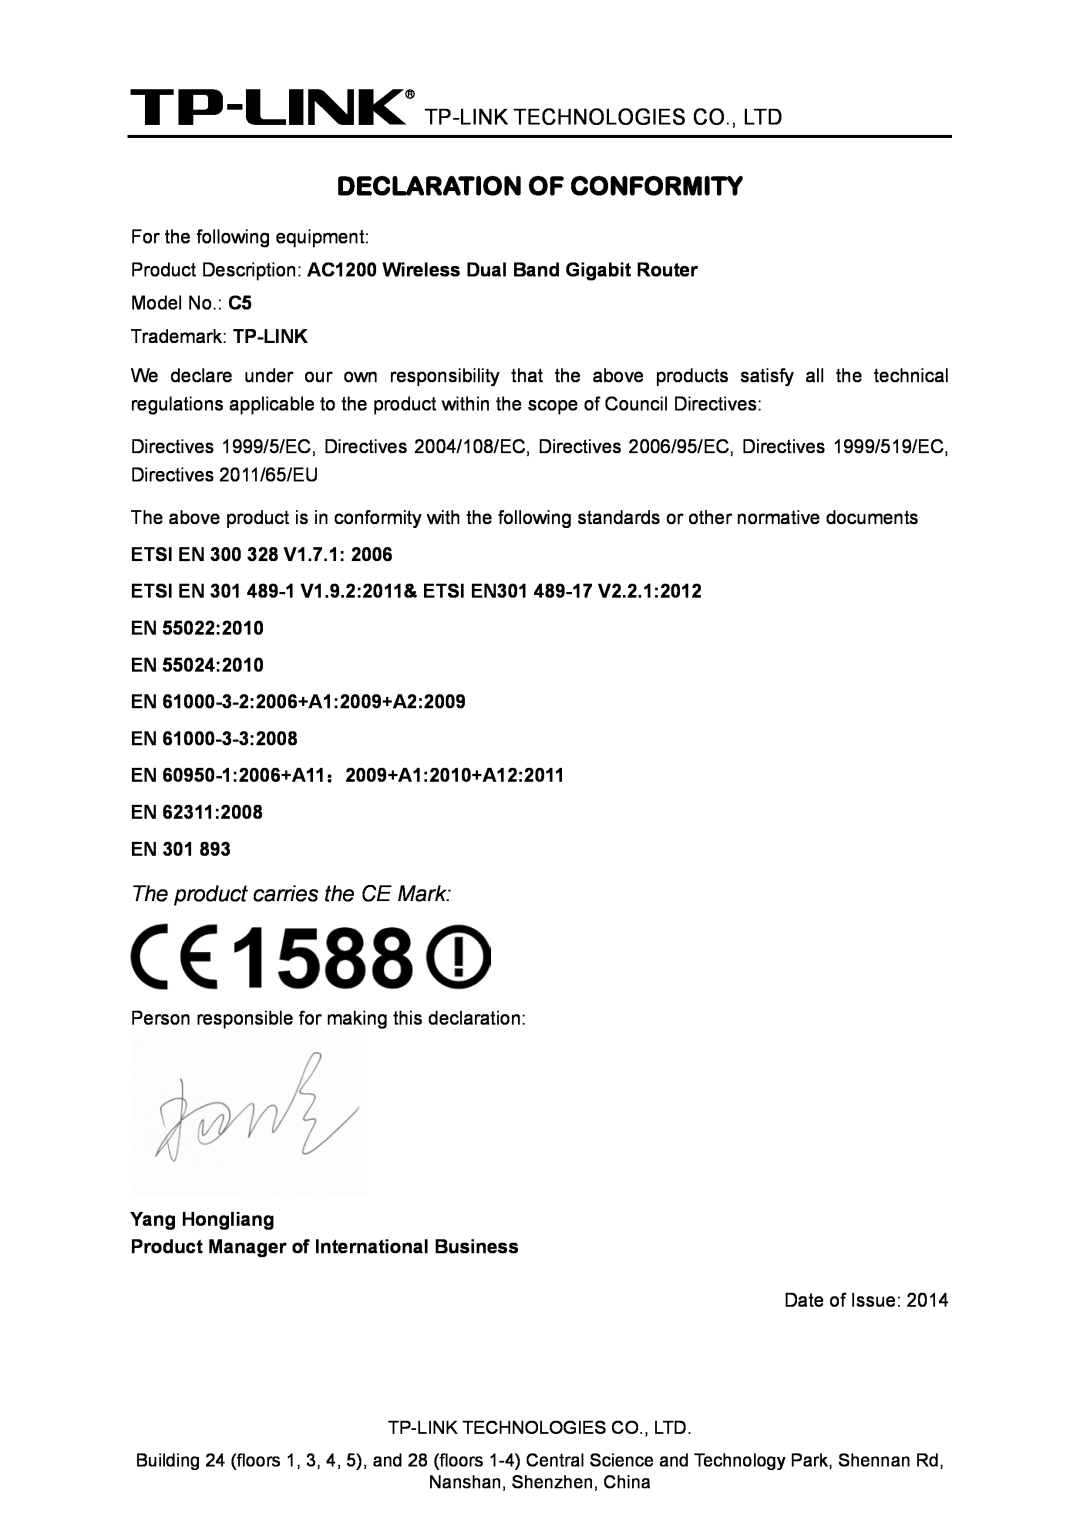 TP-Link Declaration Of Conformity, Product Description AC1200 Wireless Dual Band Gigabit Router, ETSI EN 300 328 V1.7.1 